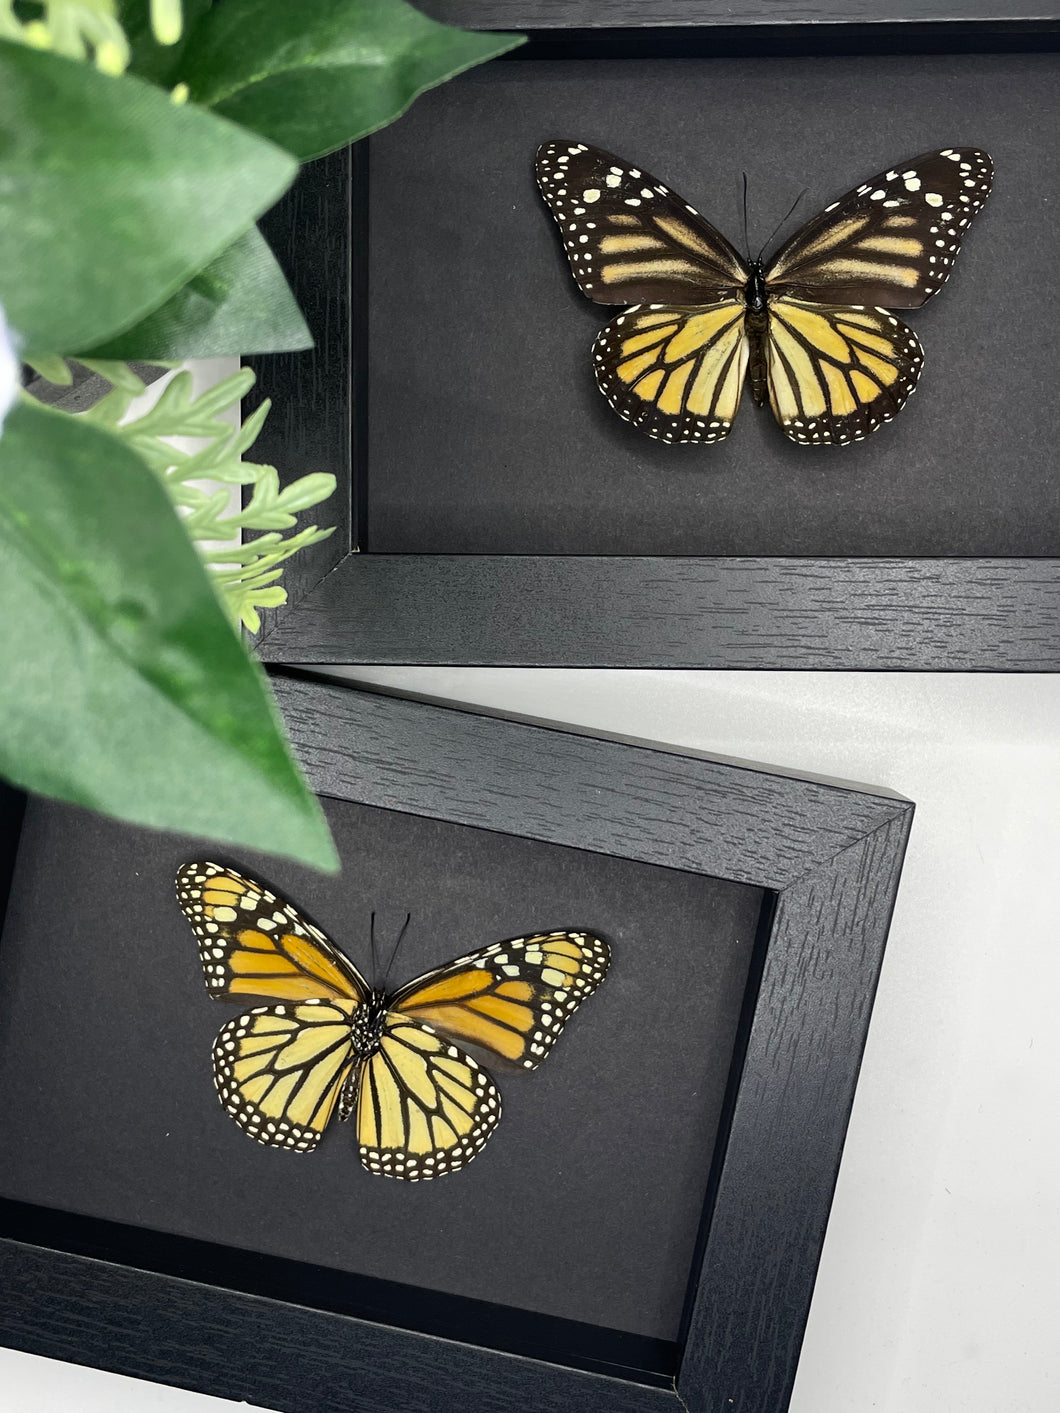 Monarch Butterfly / Danaus Plexippus in a frame | BLACK